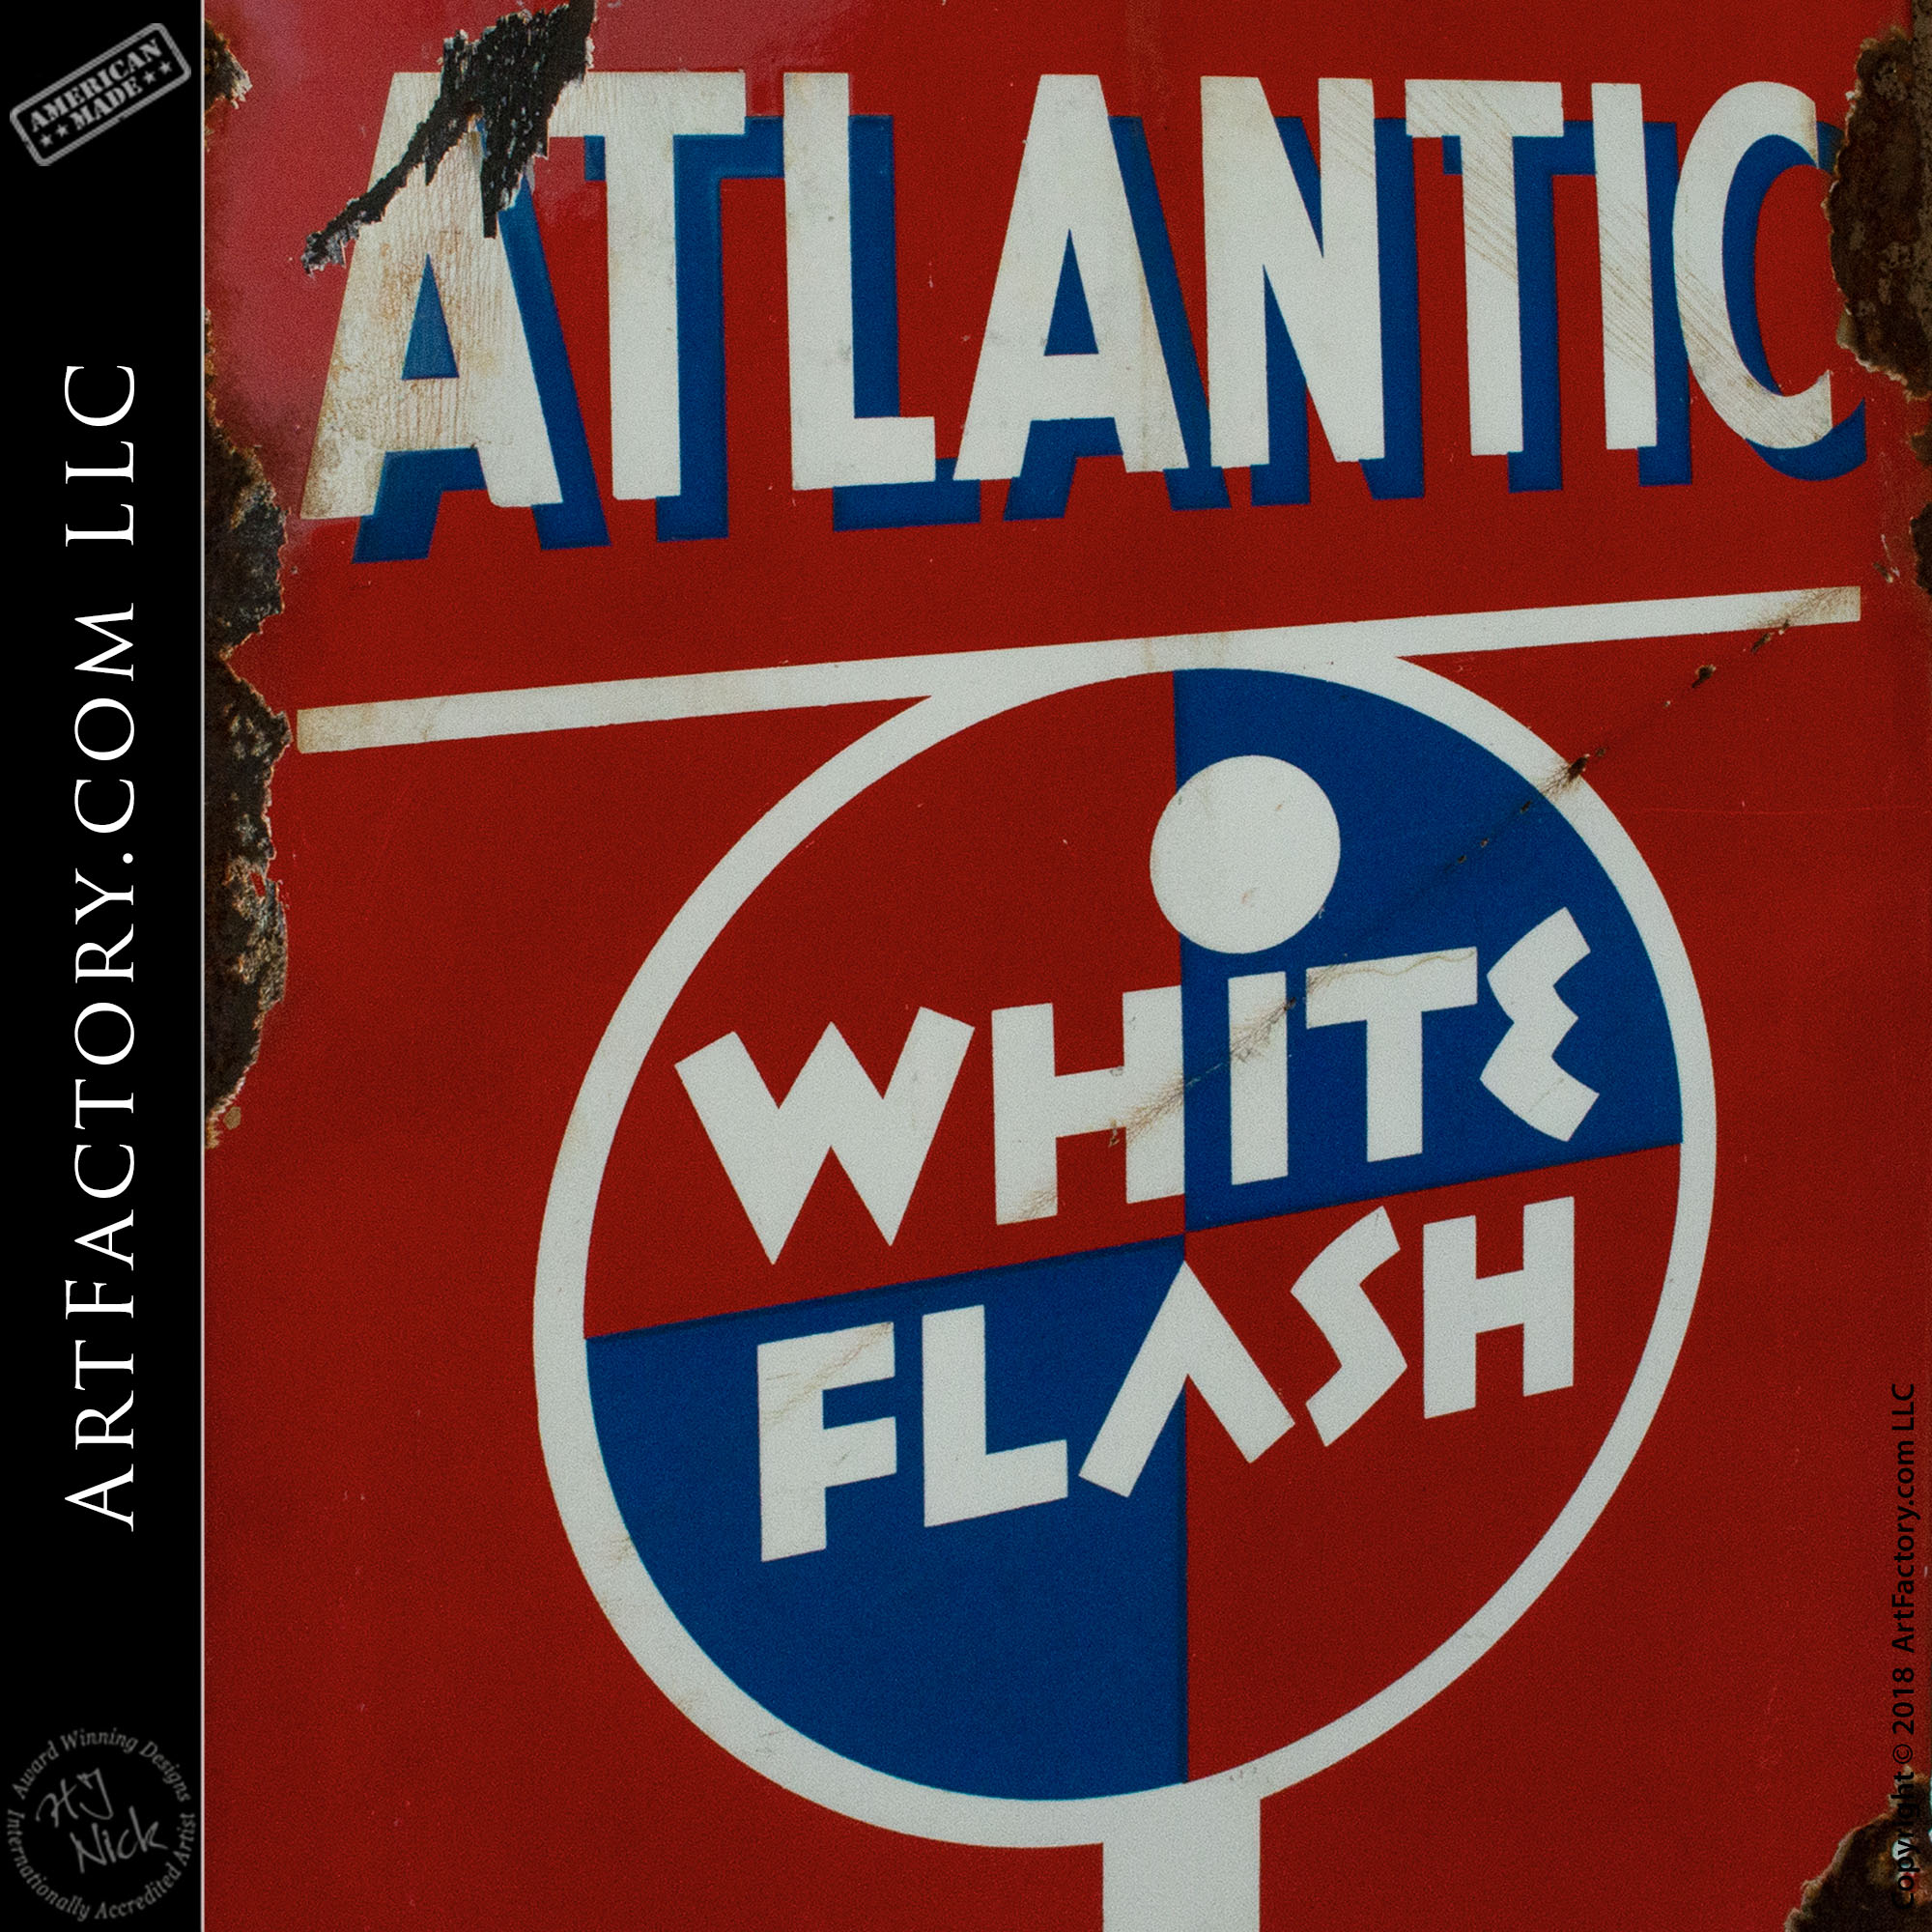 Vintage Atlantic White Flash Sign